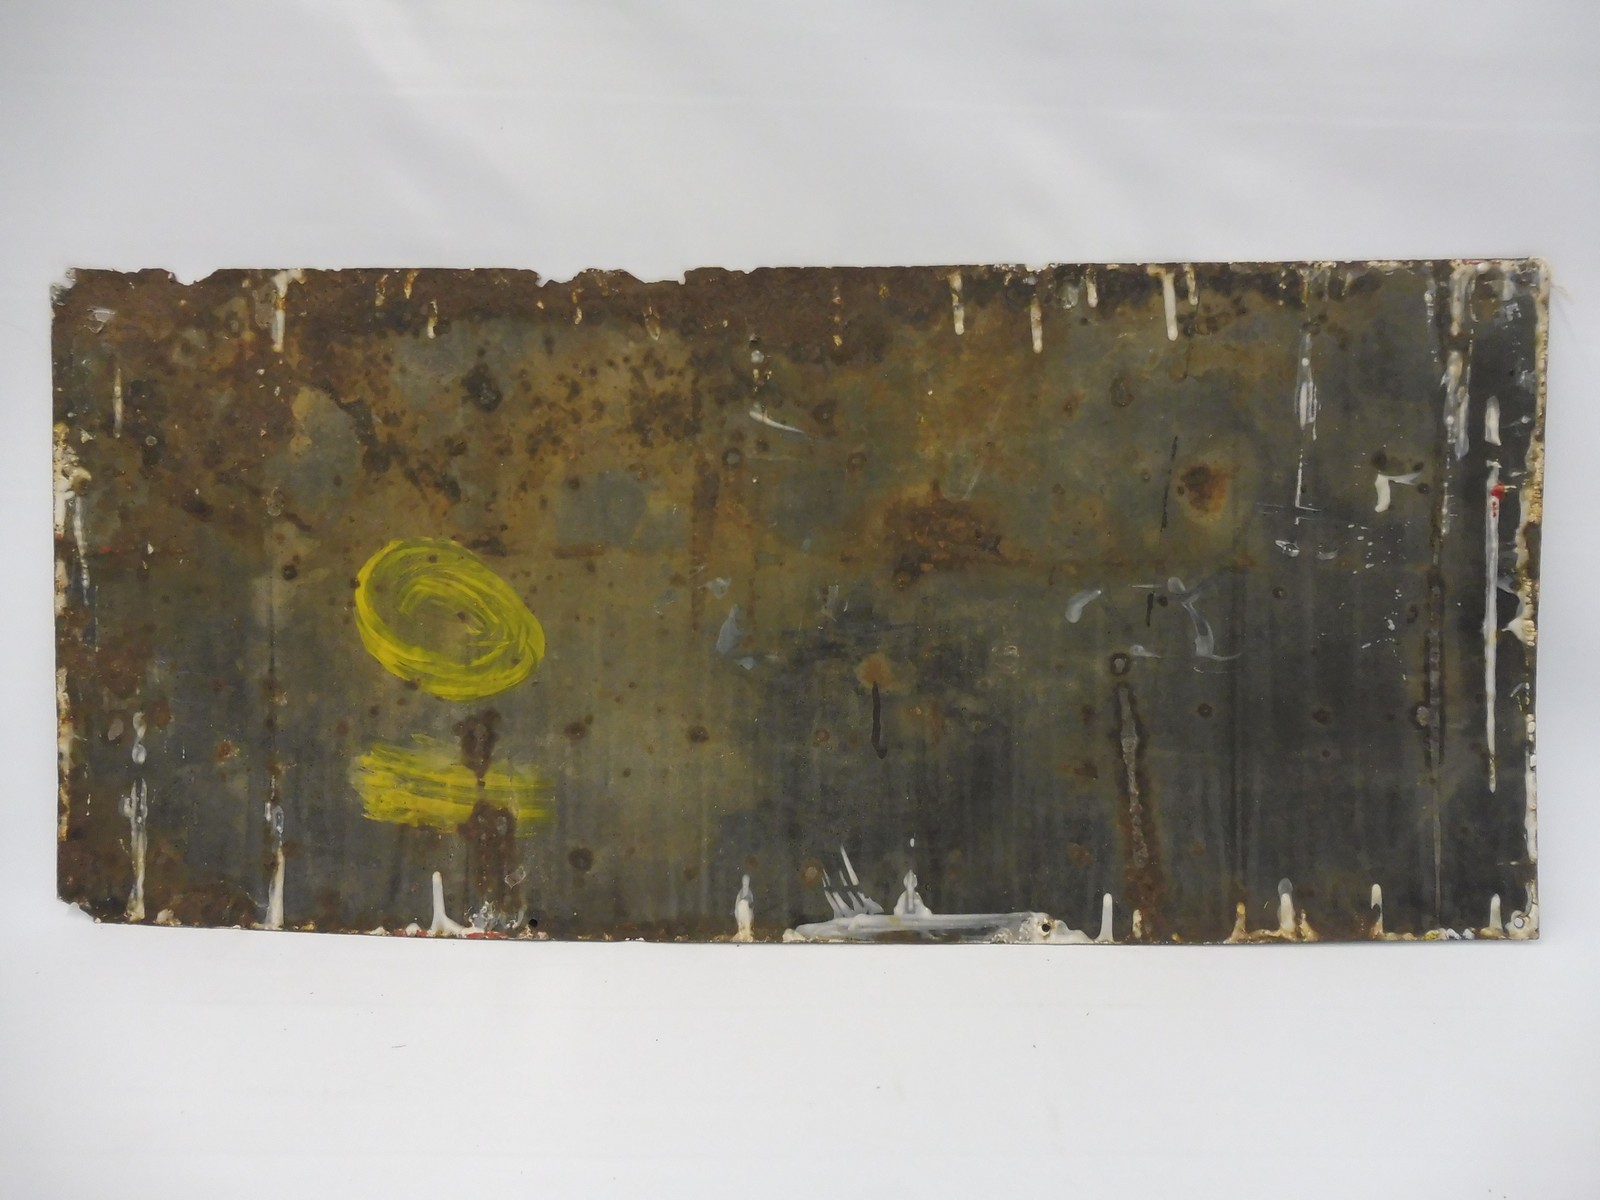 A Westward Ho! Smoking Mixture rectangular enamel sign with older amateur retouching, 40 x 18". - Image 2 of 2